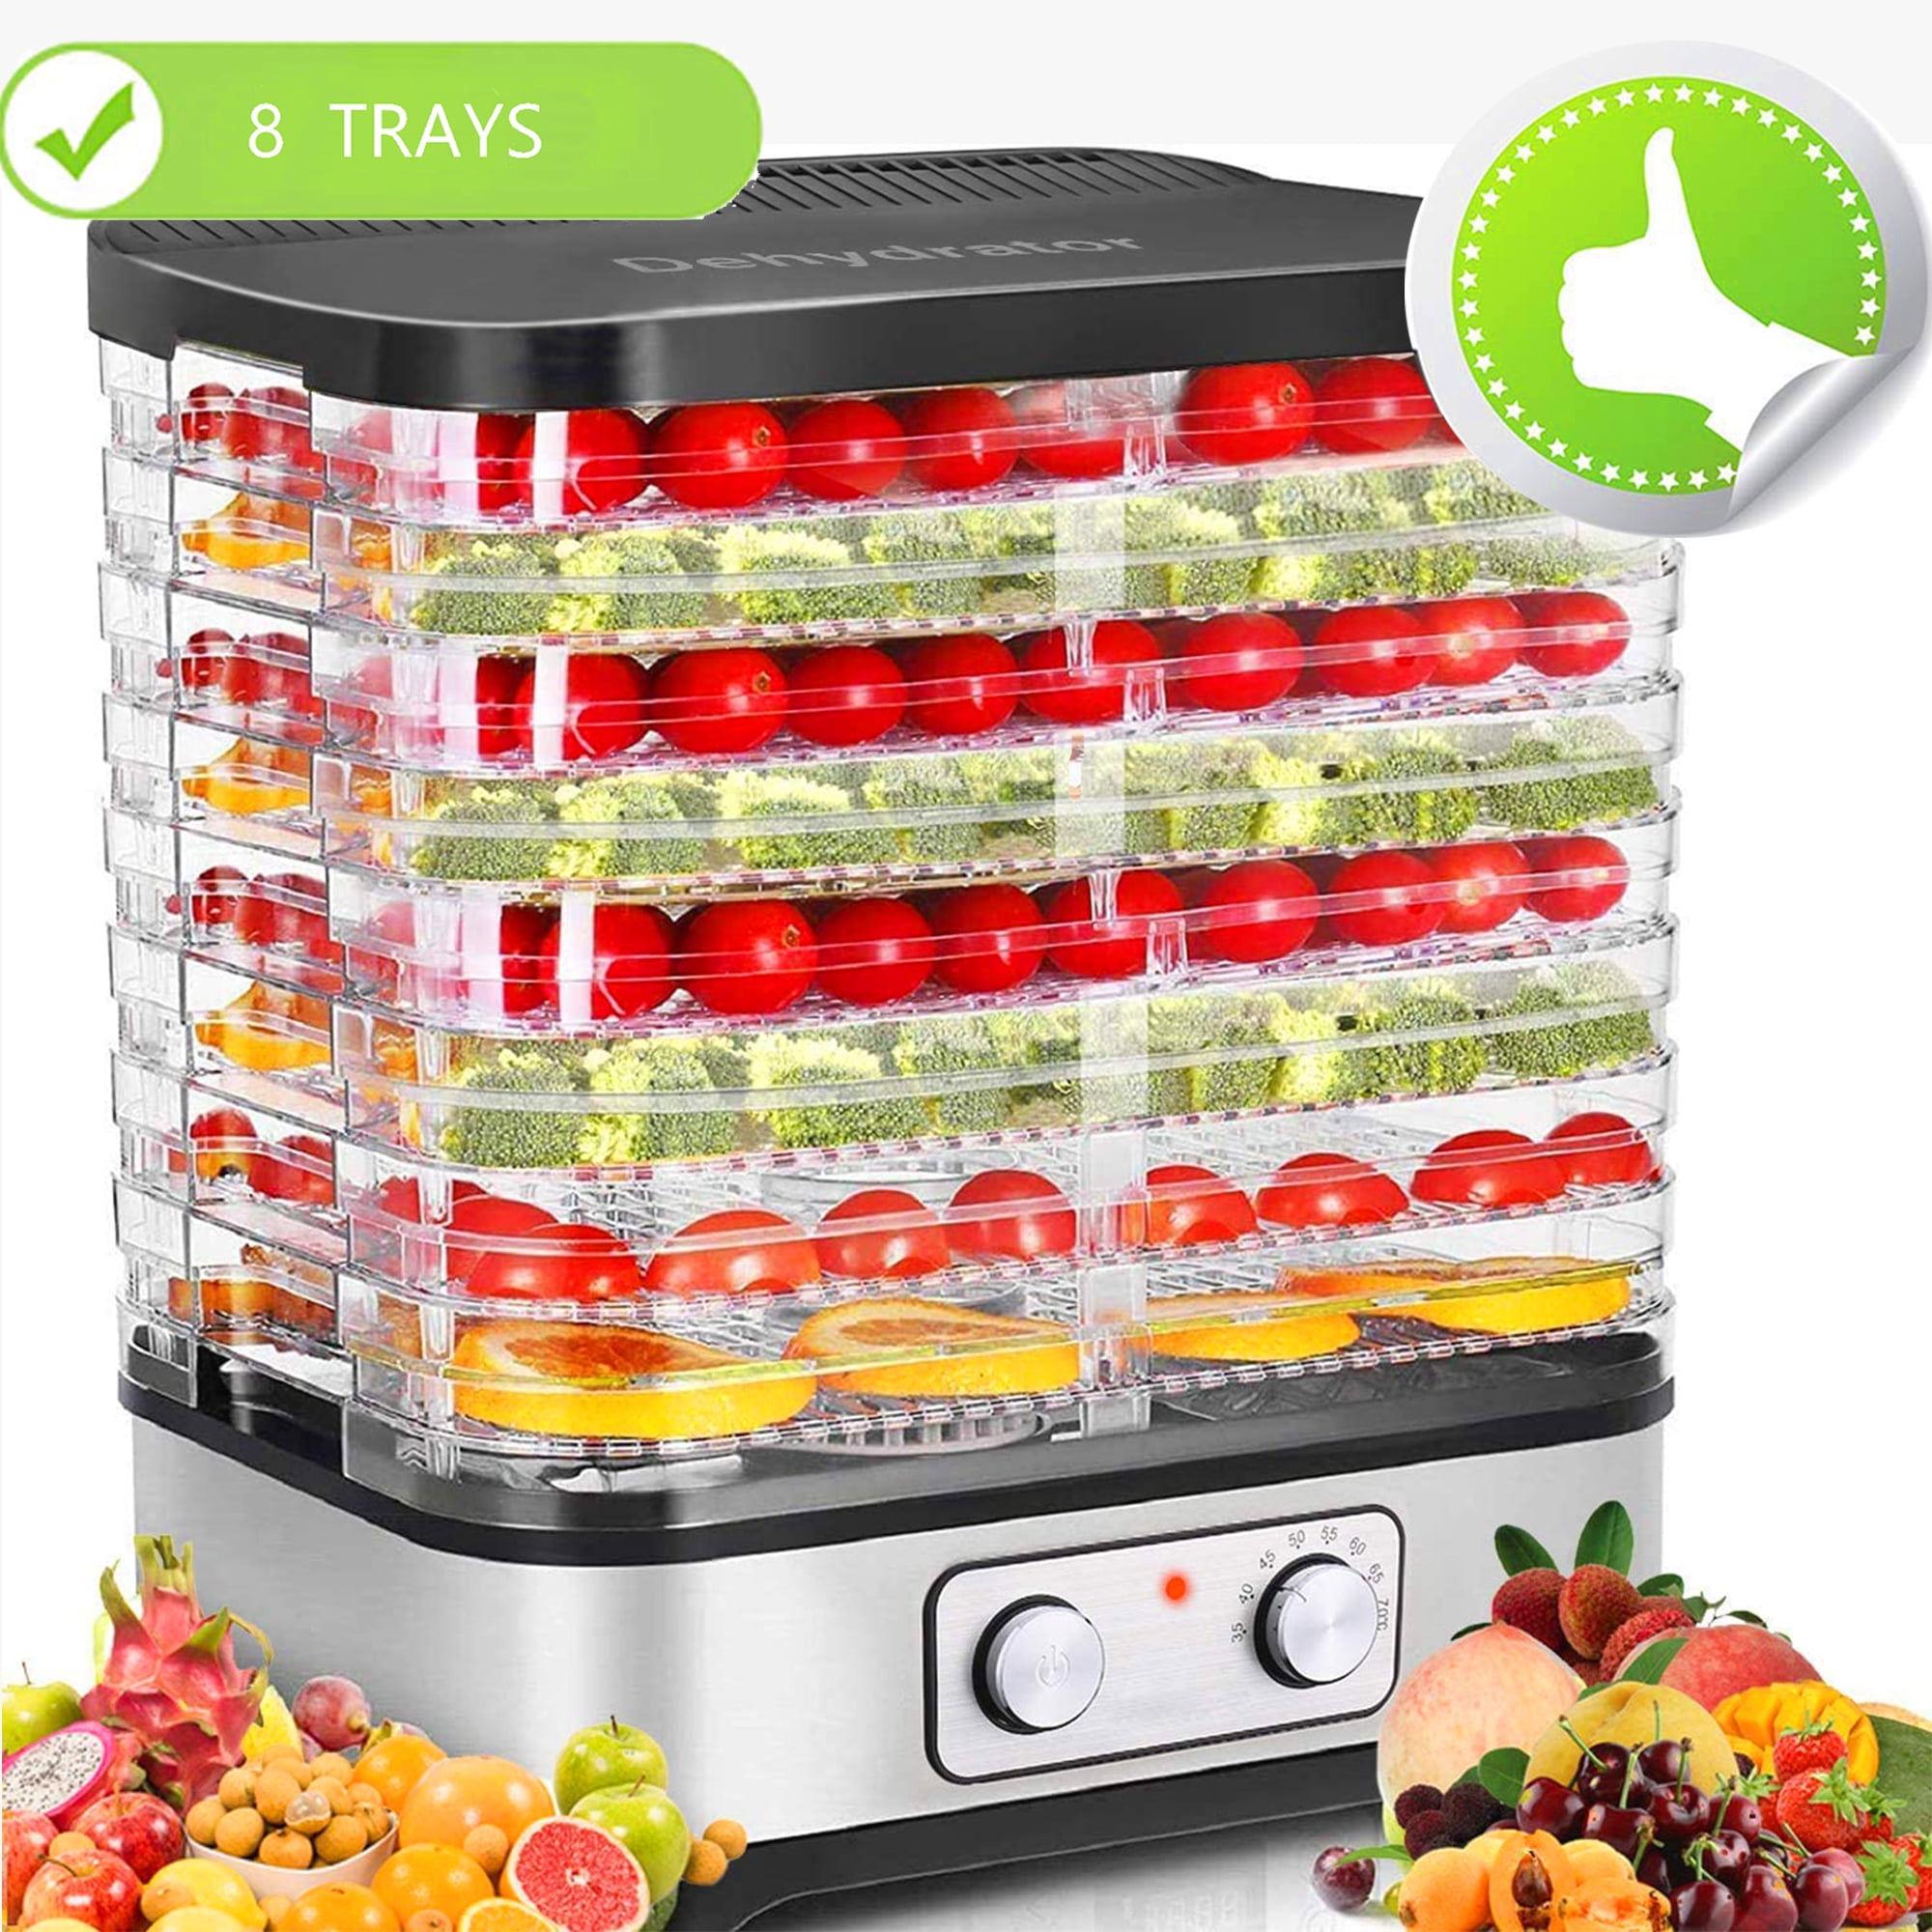 BESTEK 9 Trays Food Dehydrator Machine Quiet Fruit Dryer/ Jerky Maker  Programmable with Timer, Temperature Control